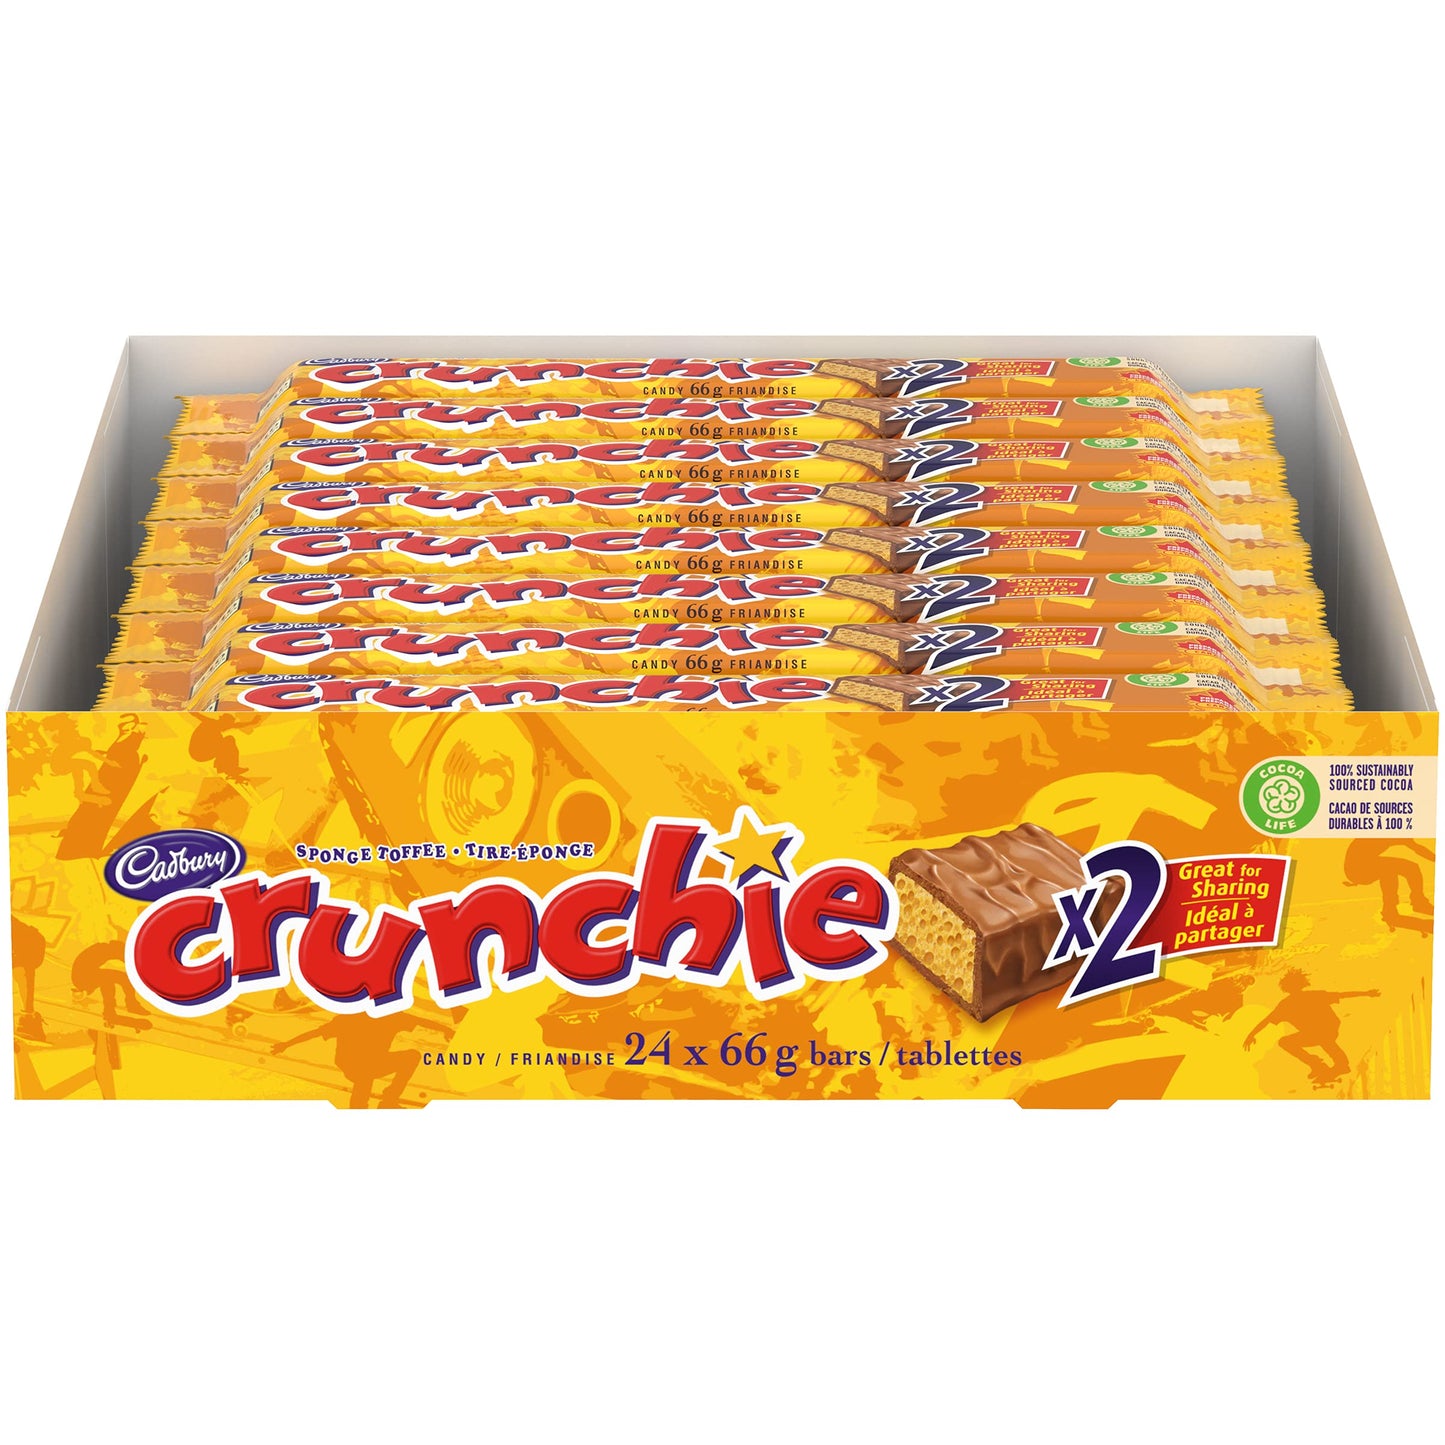 Cadbury Crunchie King Size Bar 66g - 24ct